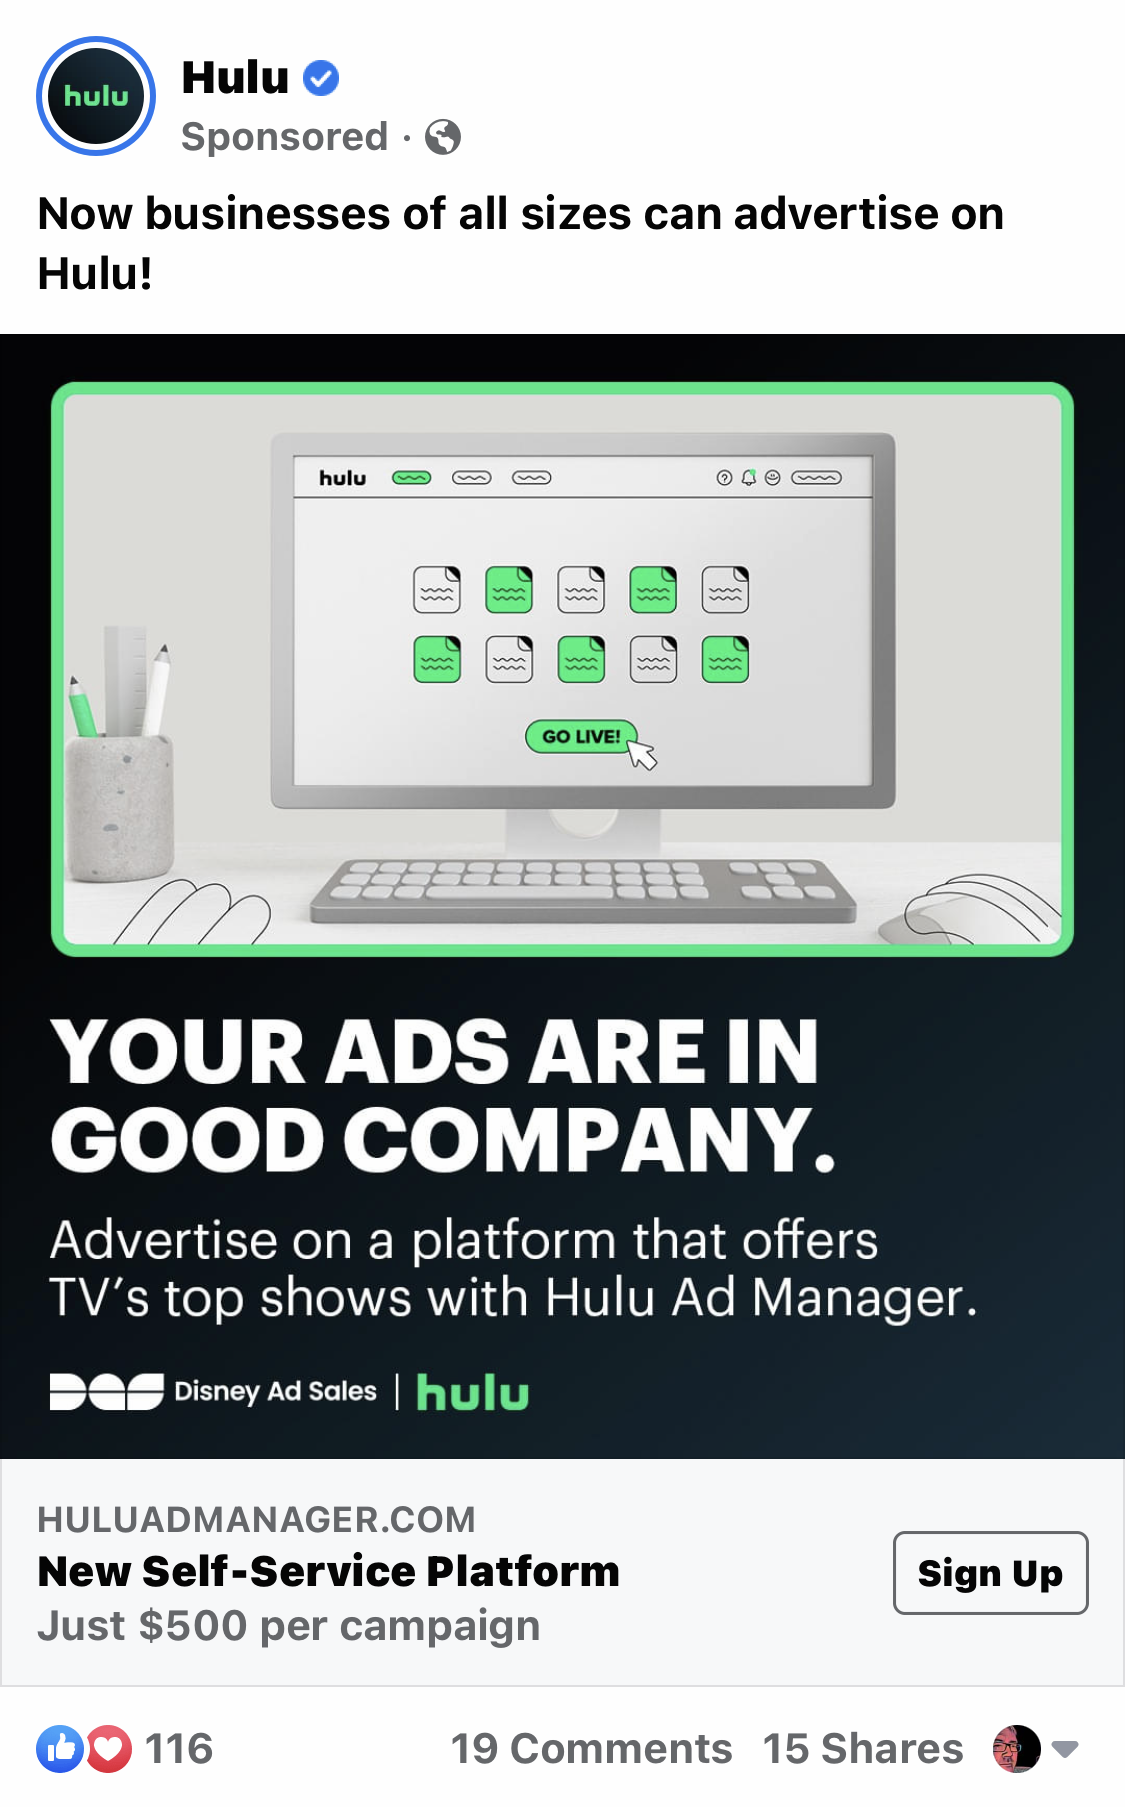 Hulu Facebook Image Ad